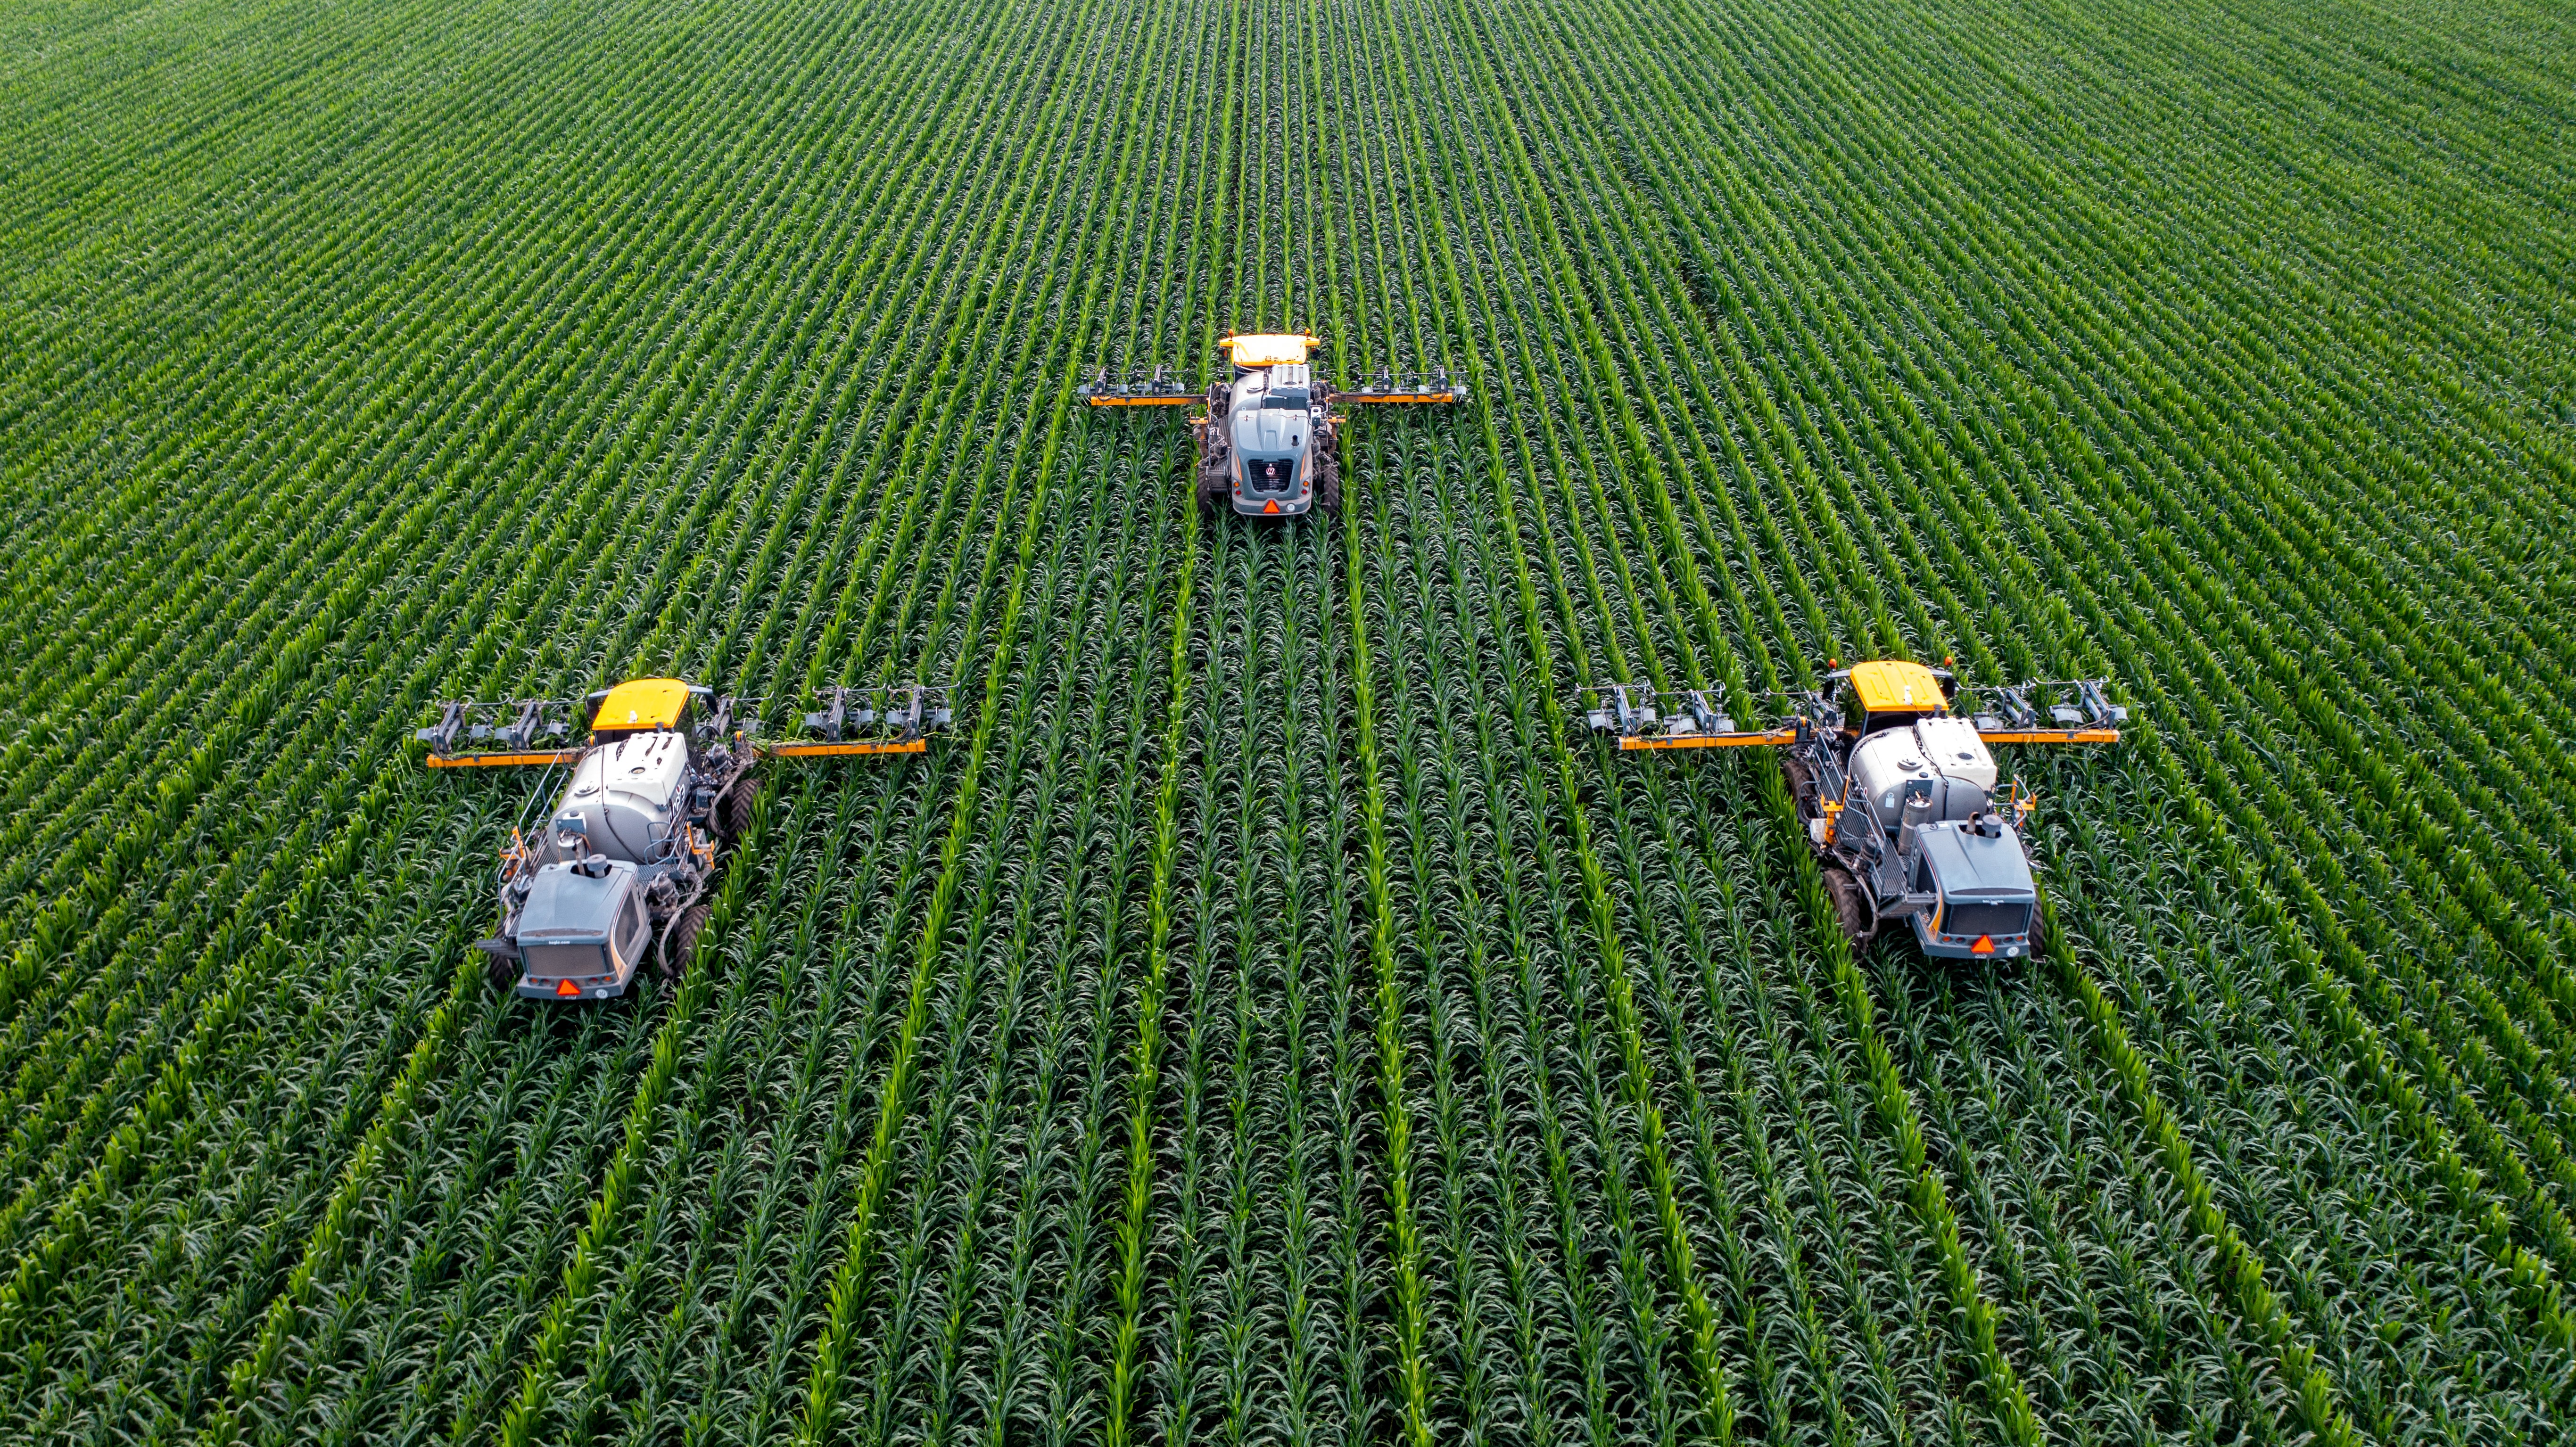 Three harvesting tractors drive through a field